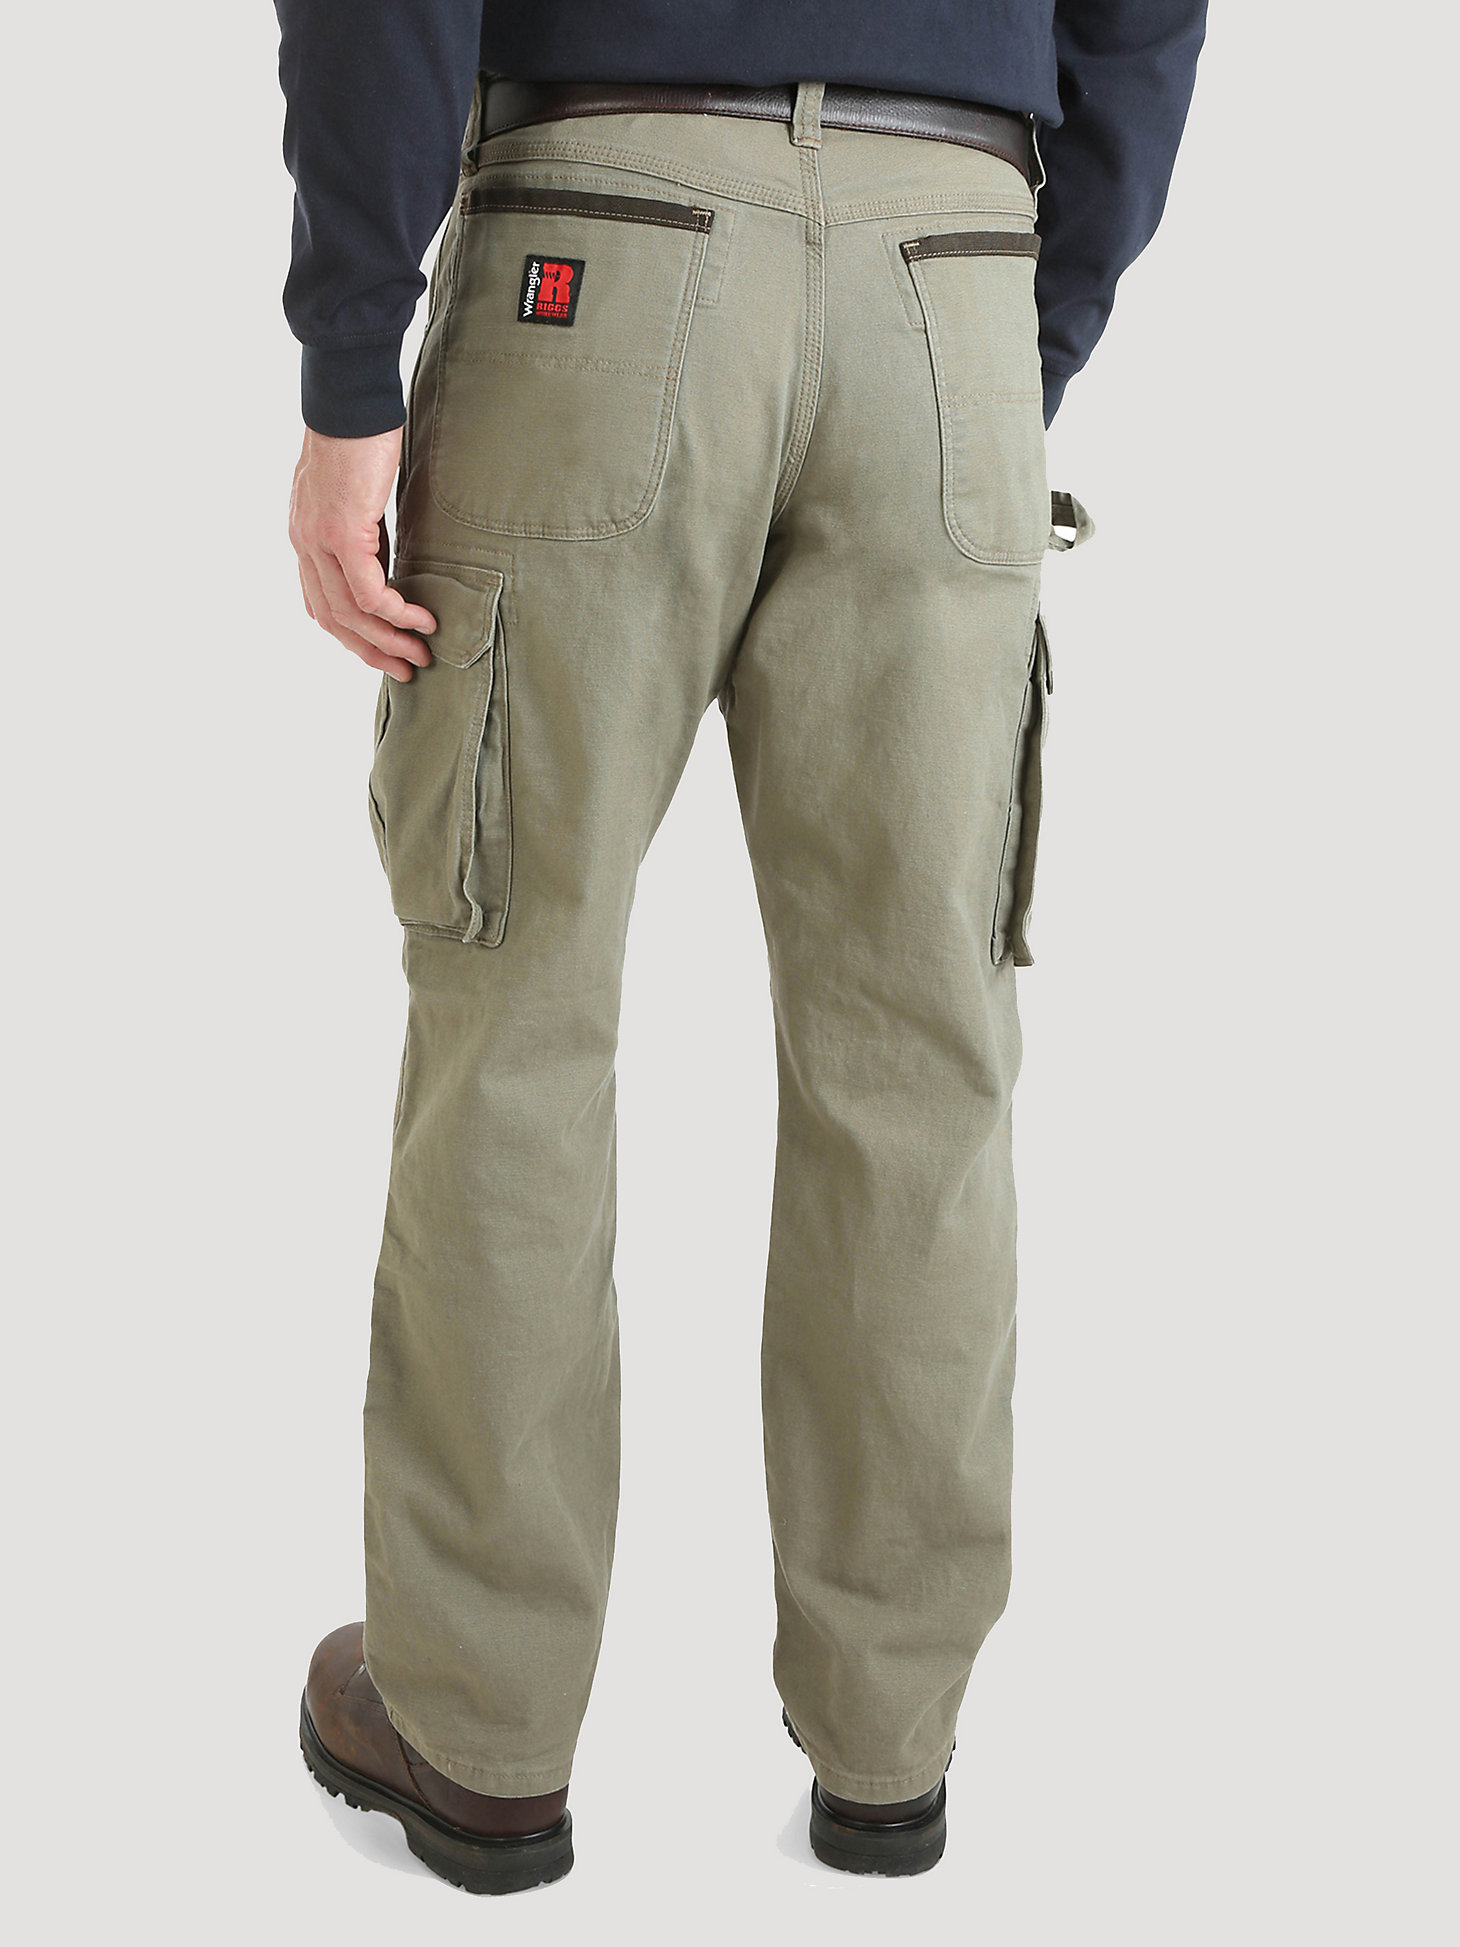 Wrangler® RIGGS Workwear® Advanced Comfort Lightweight Ranger Pant | Men's  PANTS | Wrangler®